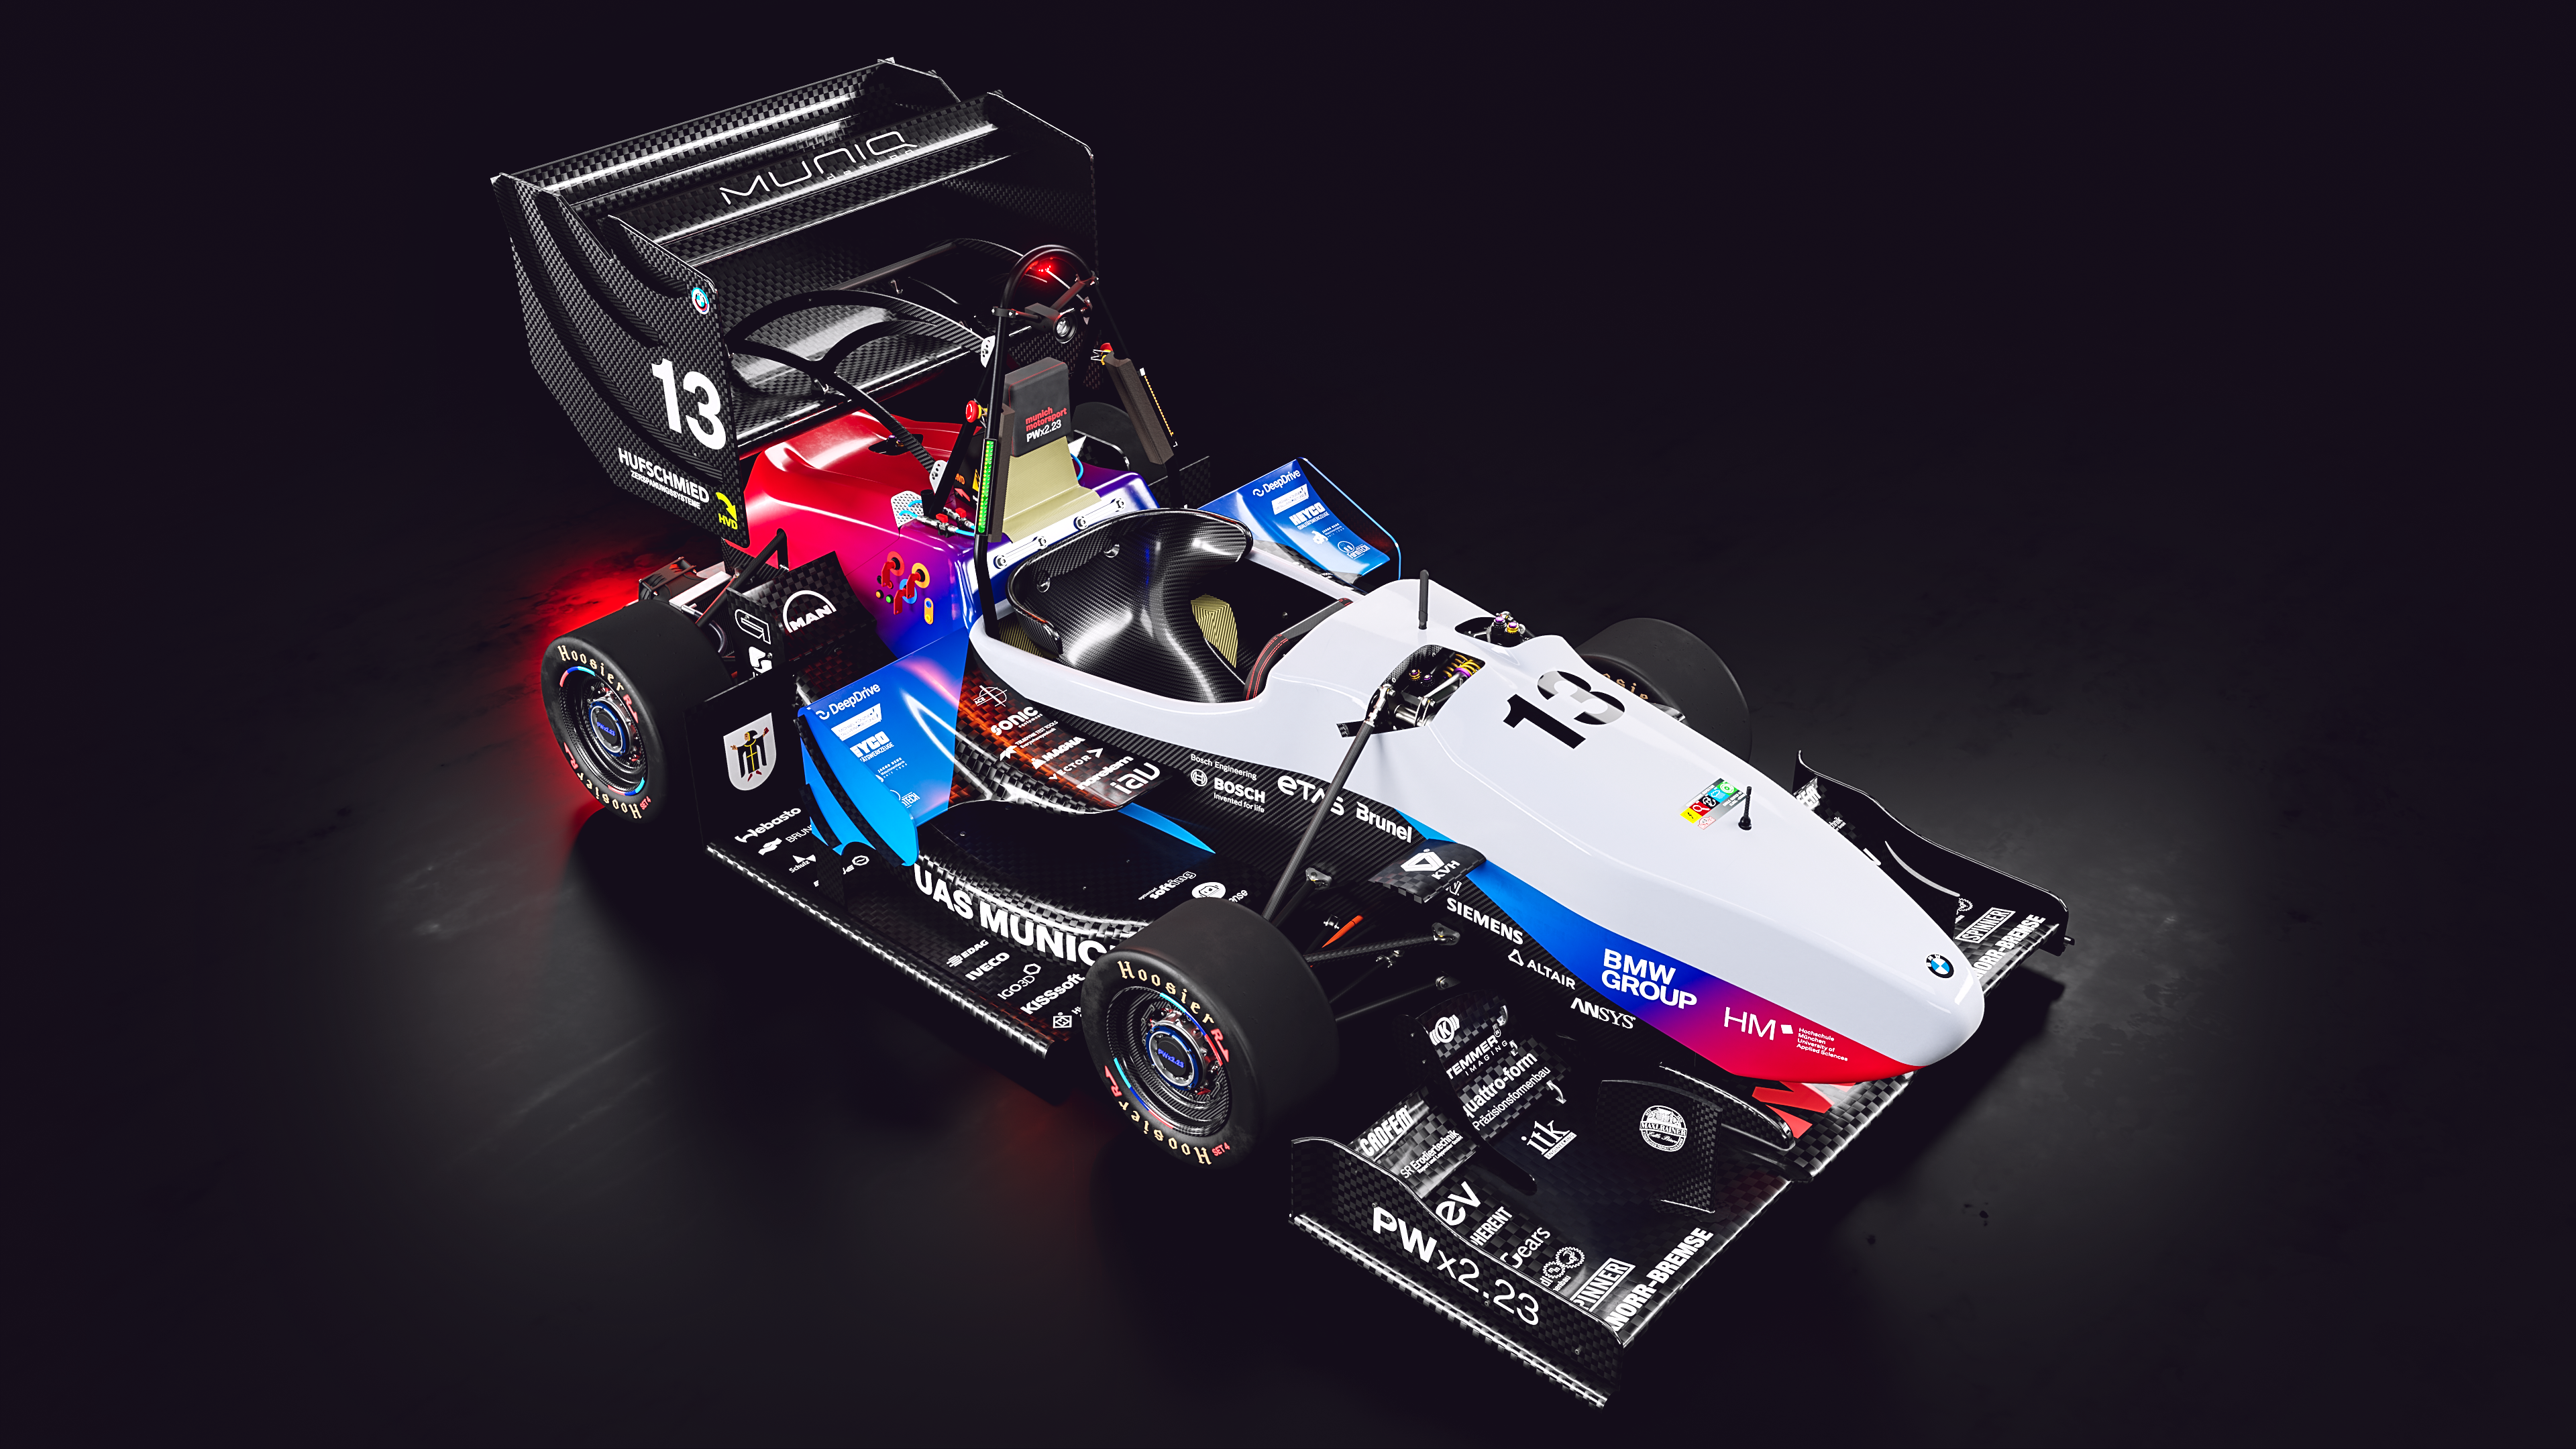 Neues Auto des municHMotorsport Formular Student Teams